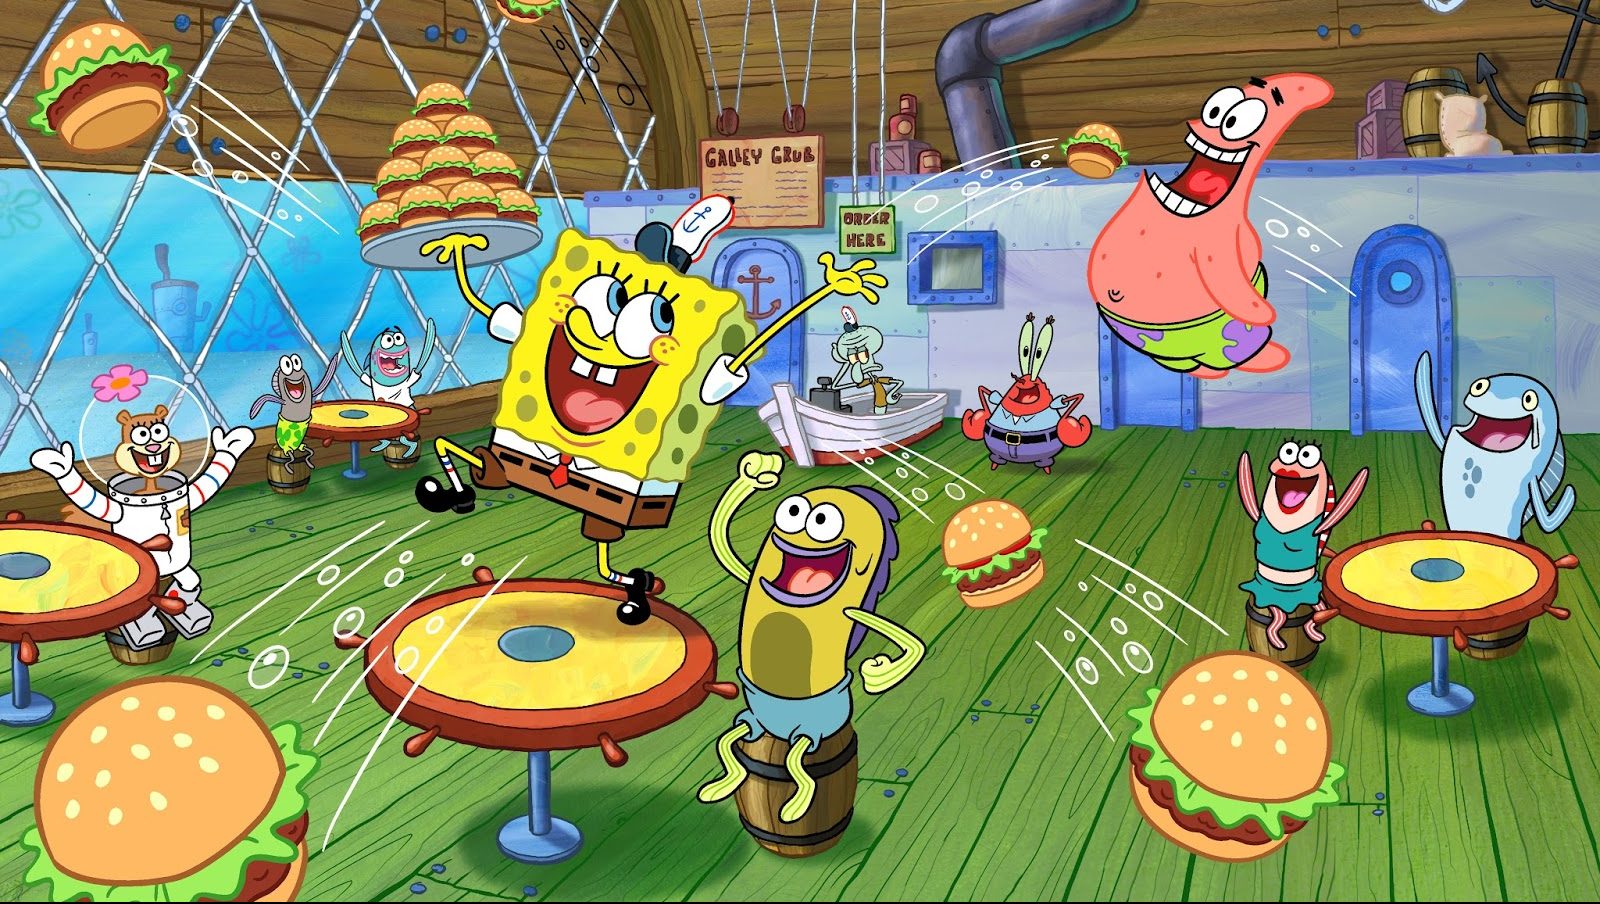 where can i watch spongebob squarepants episodes